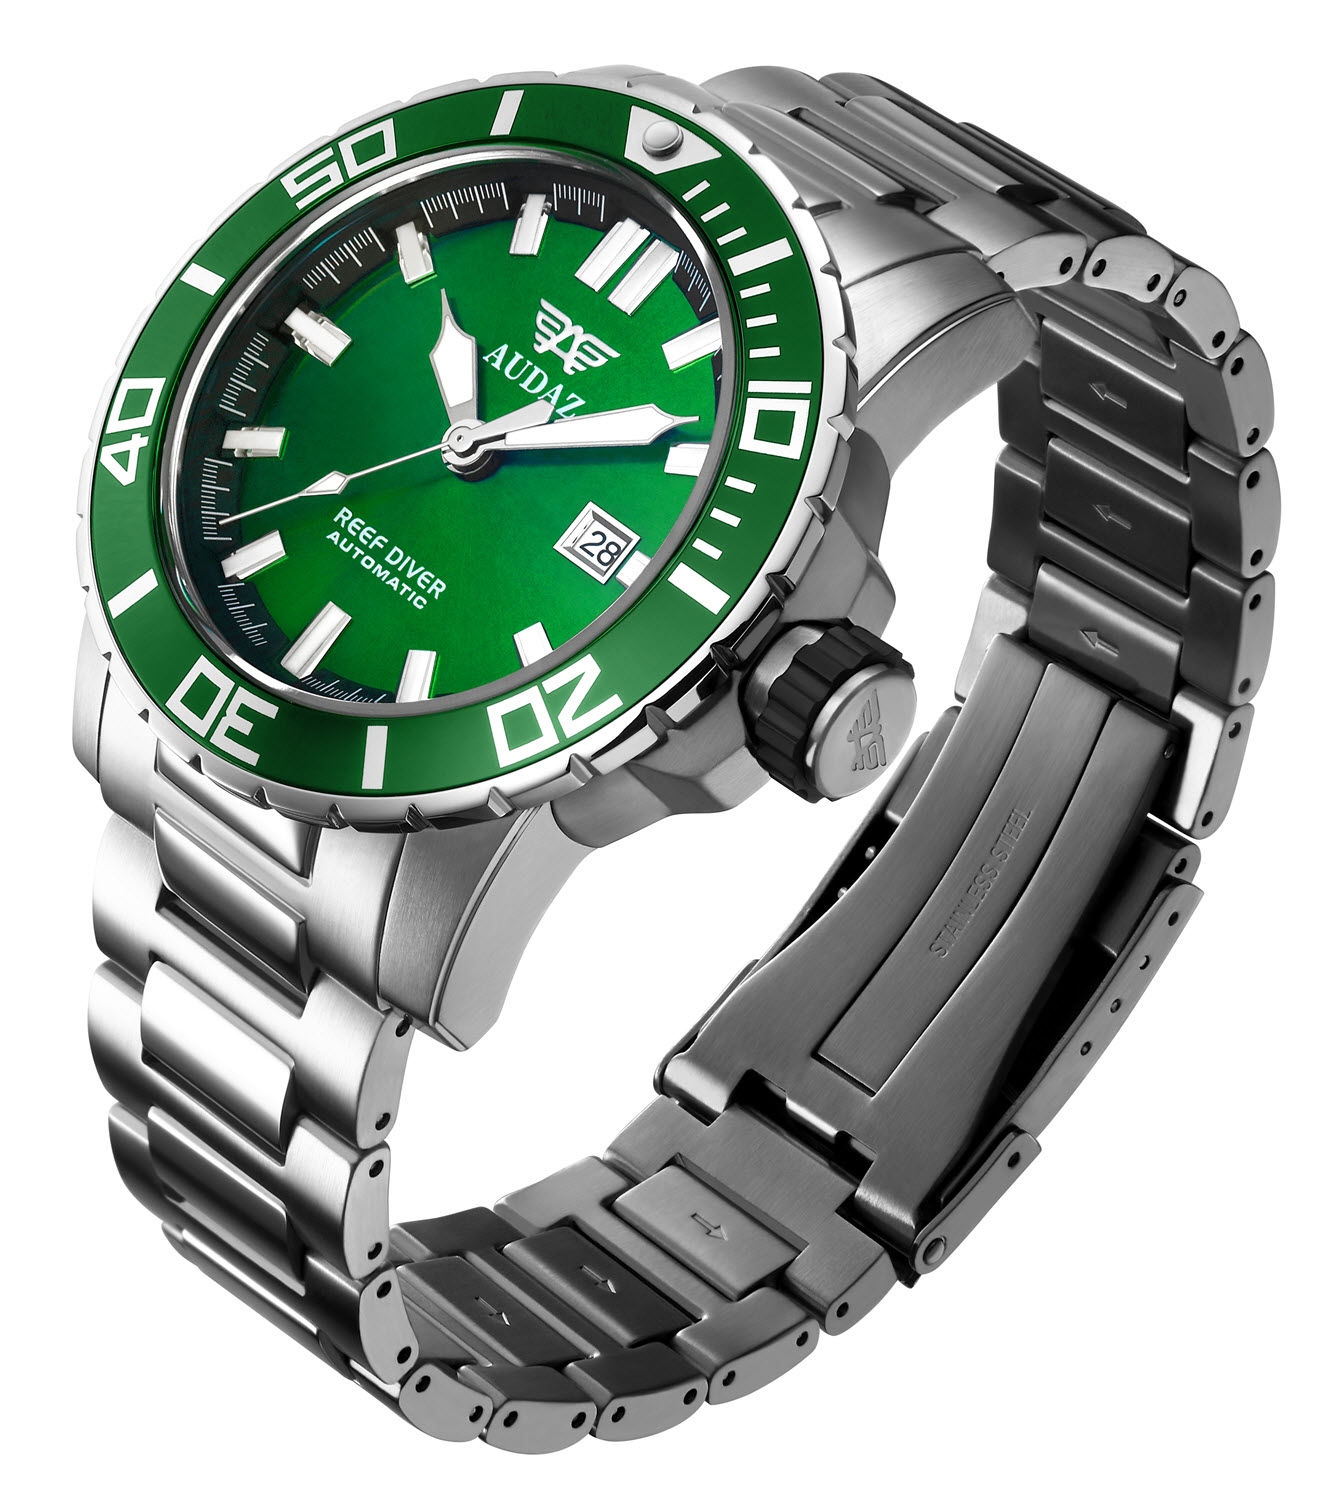 Audaz Reef Diver Green Sunray Men's Diver Automatic Watch 45mm ADZ-2040-06